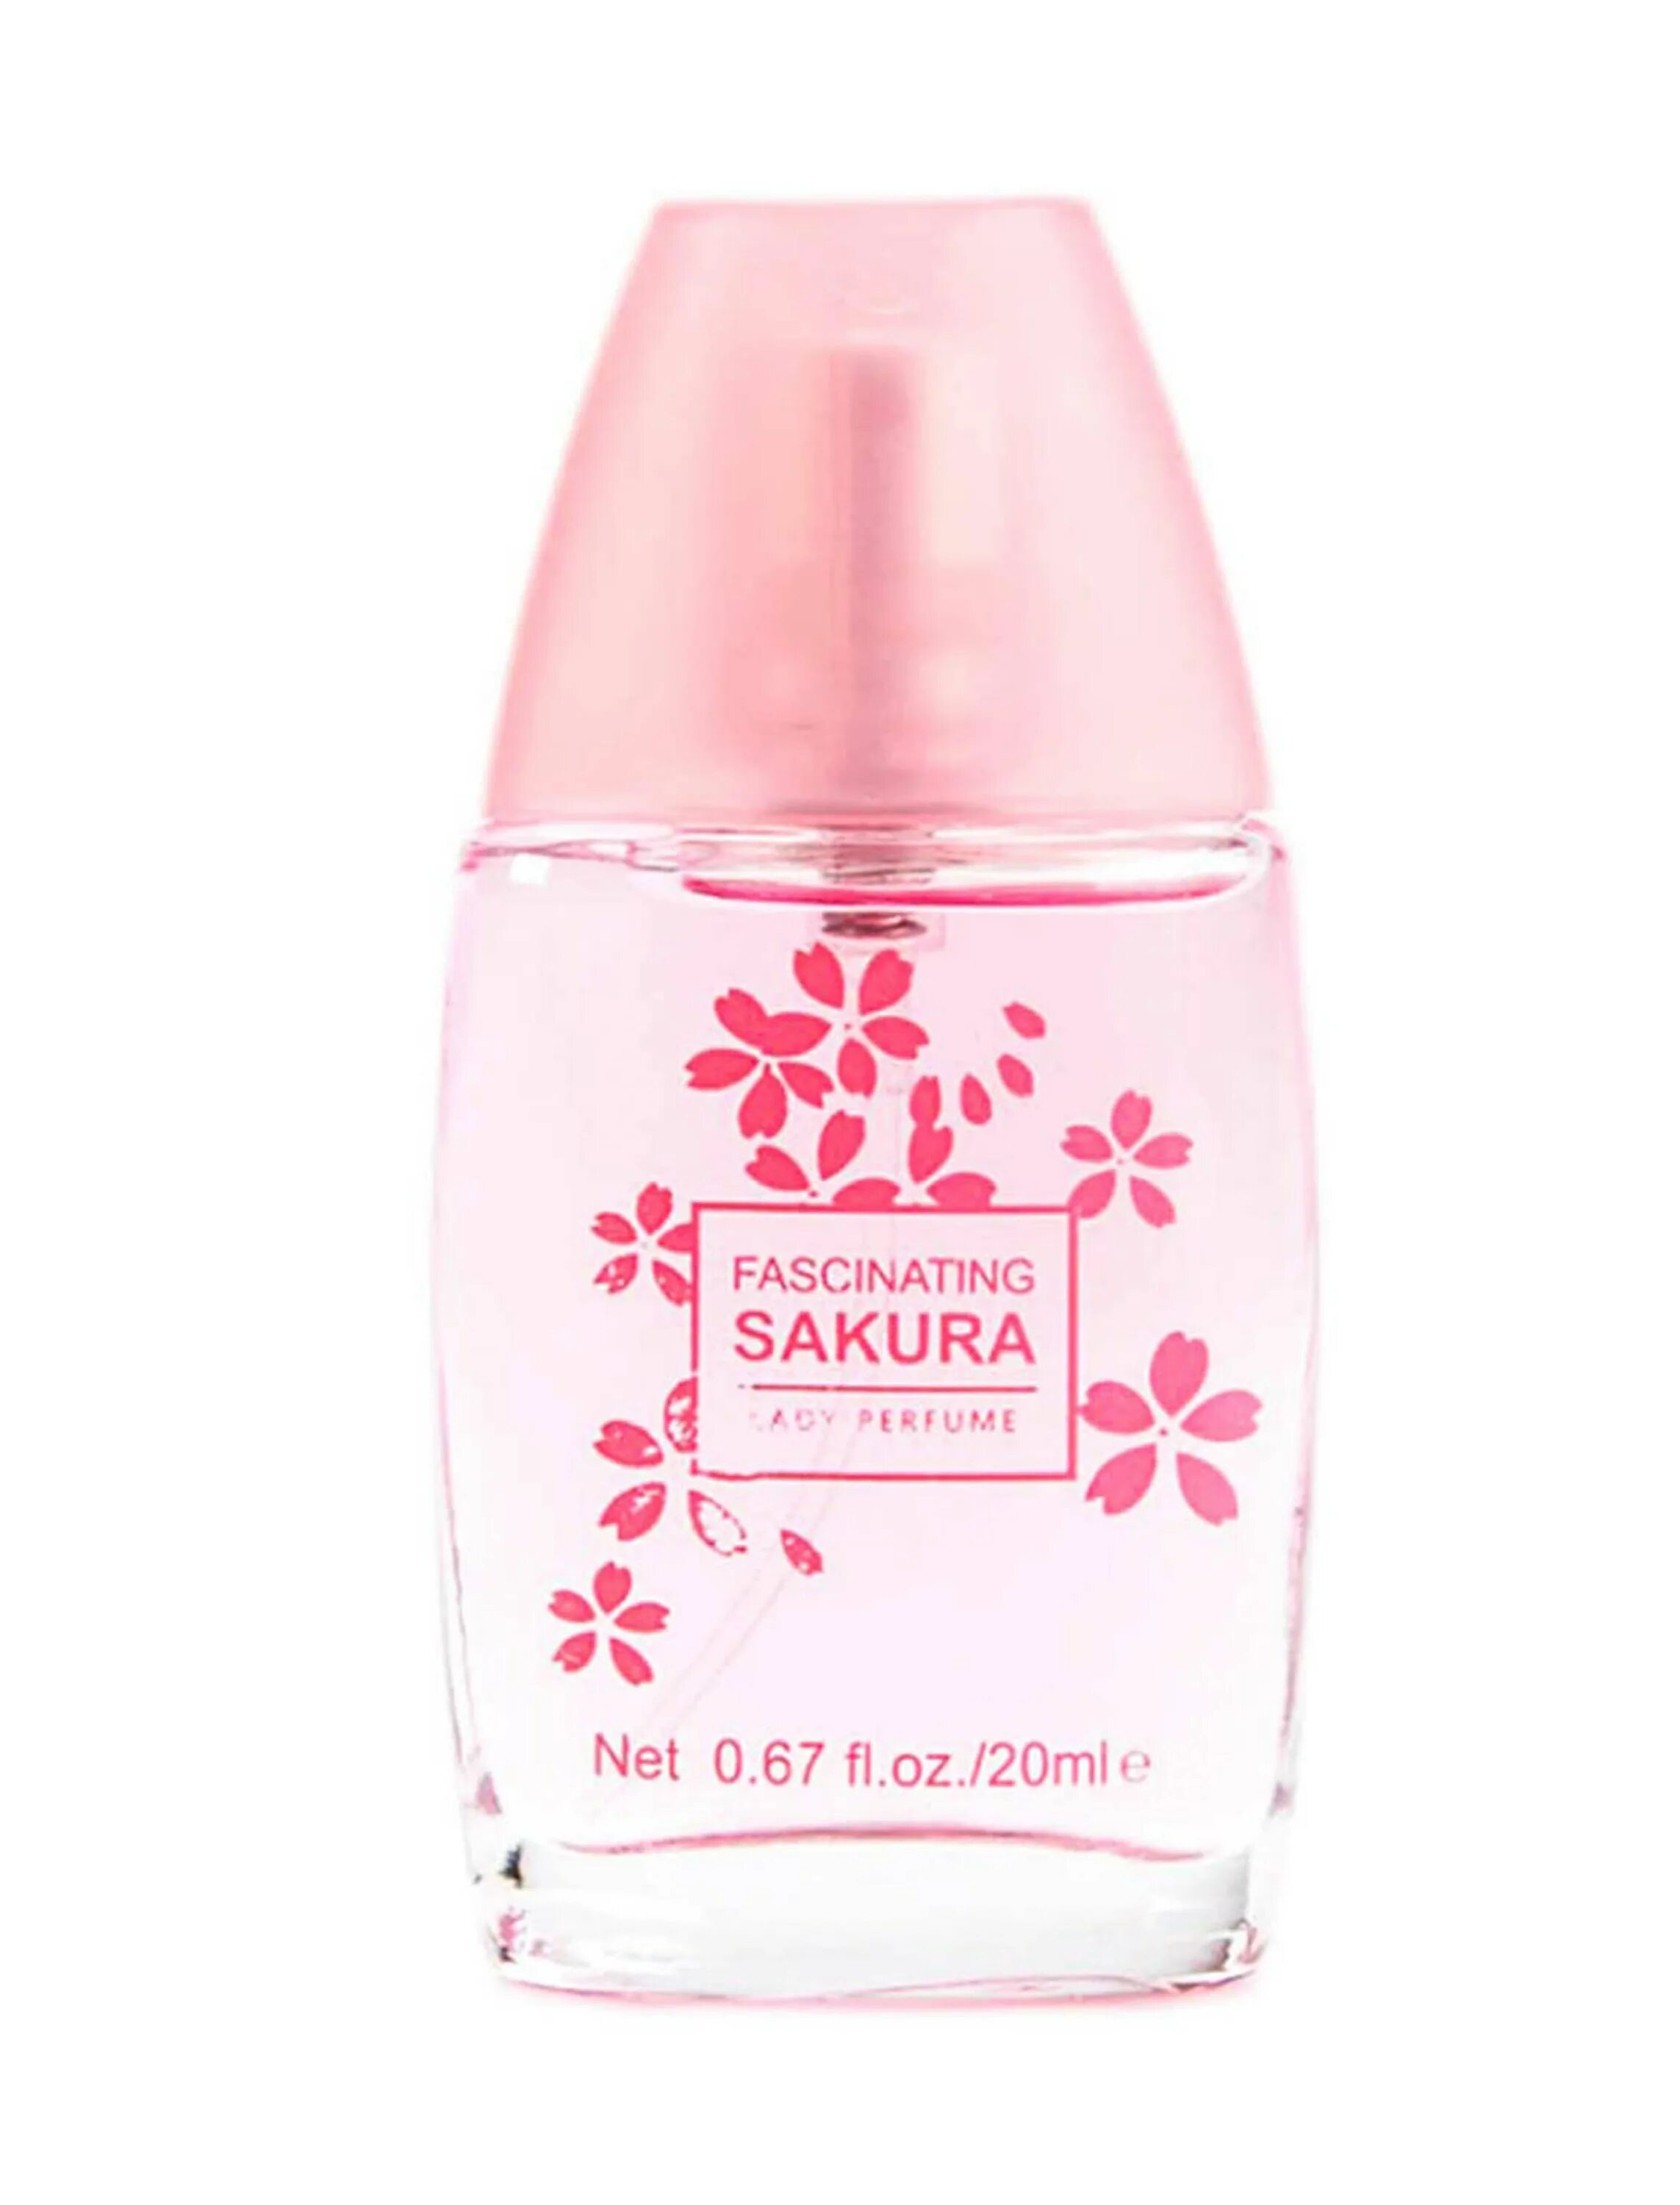 Miniso духи Sakura. Духи из минисо Сакура. Miniso fascinating Sakura Lady Perfume. Туалетная вода Сакура Matsushima. Духи cherry blossom